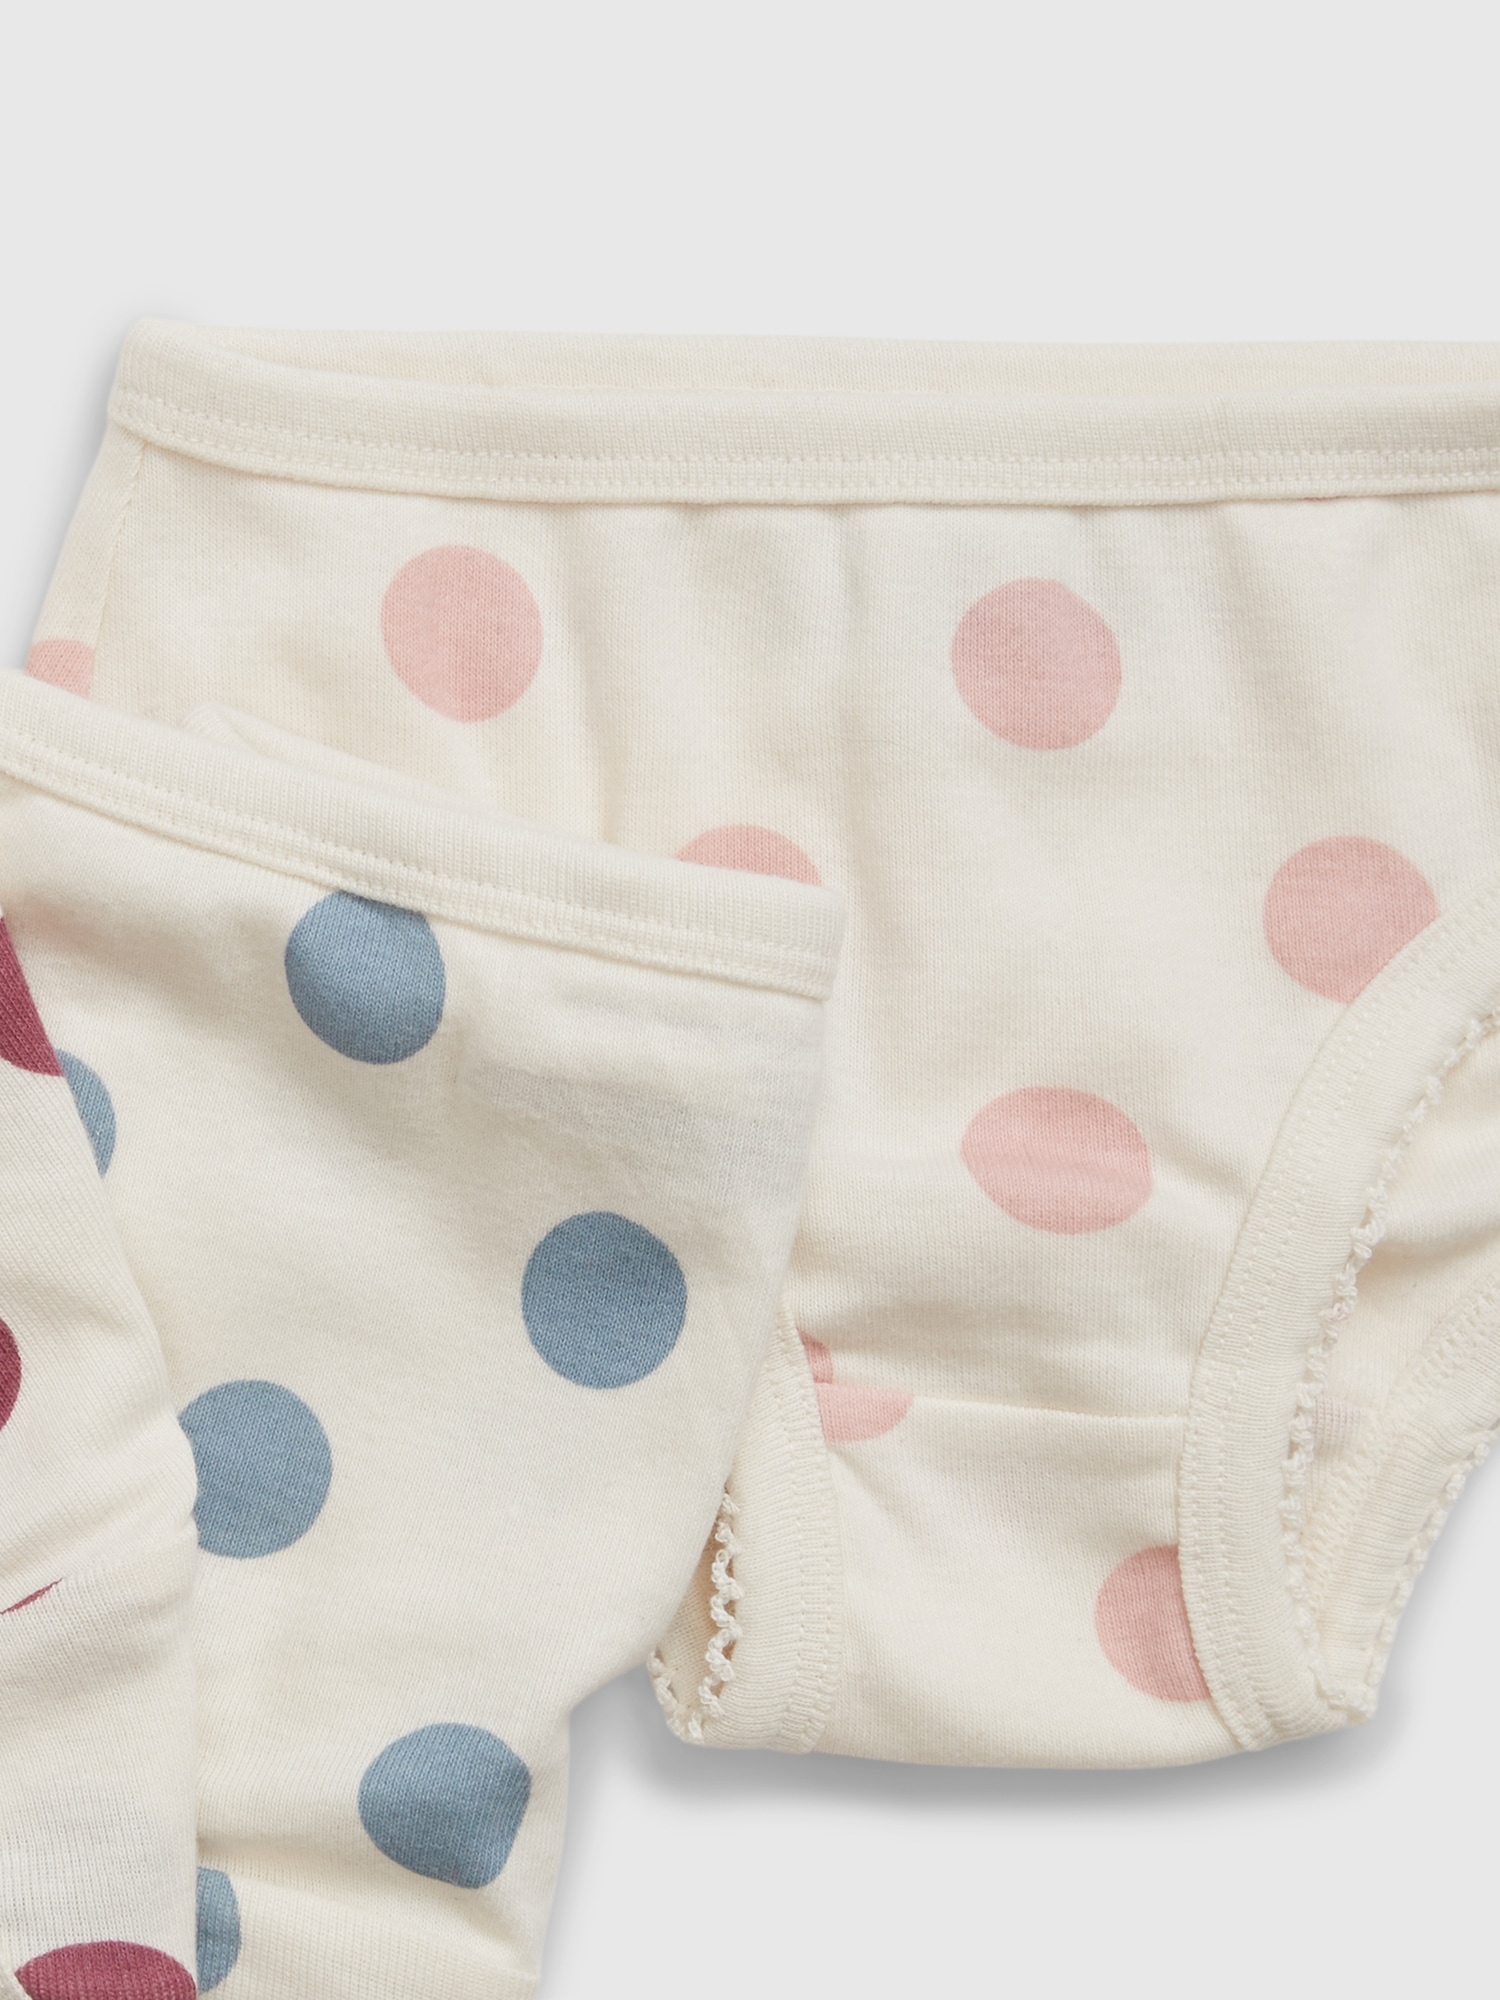 Tiny Undies - small baby underwear, 3-pack, Tiny Undies